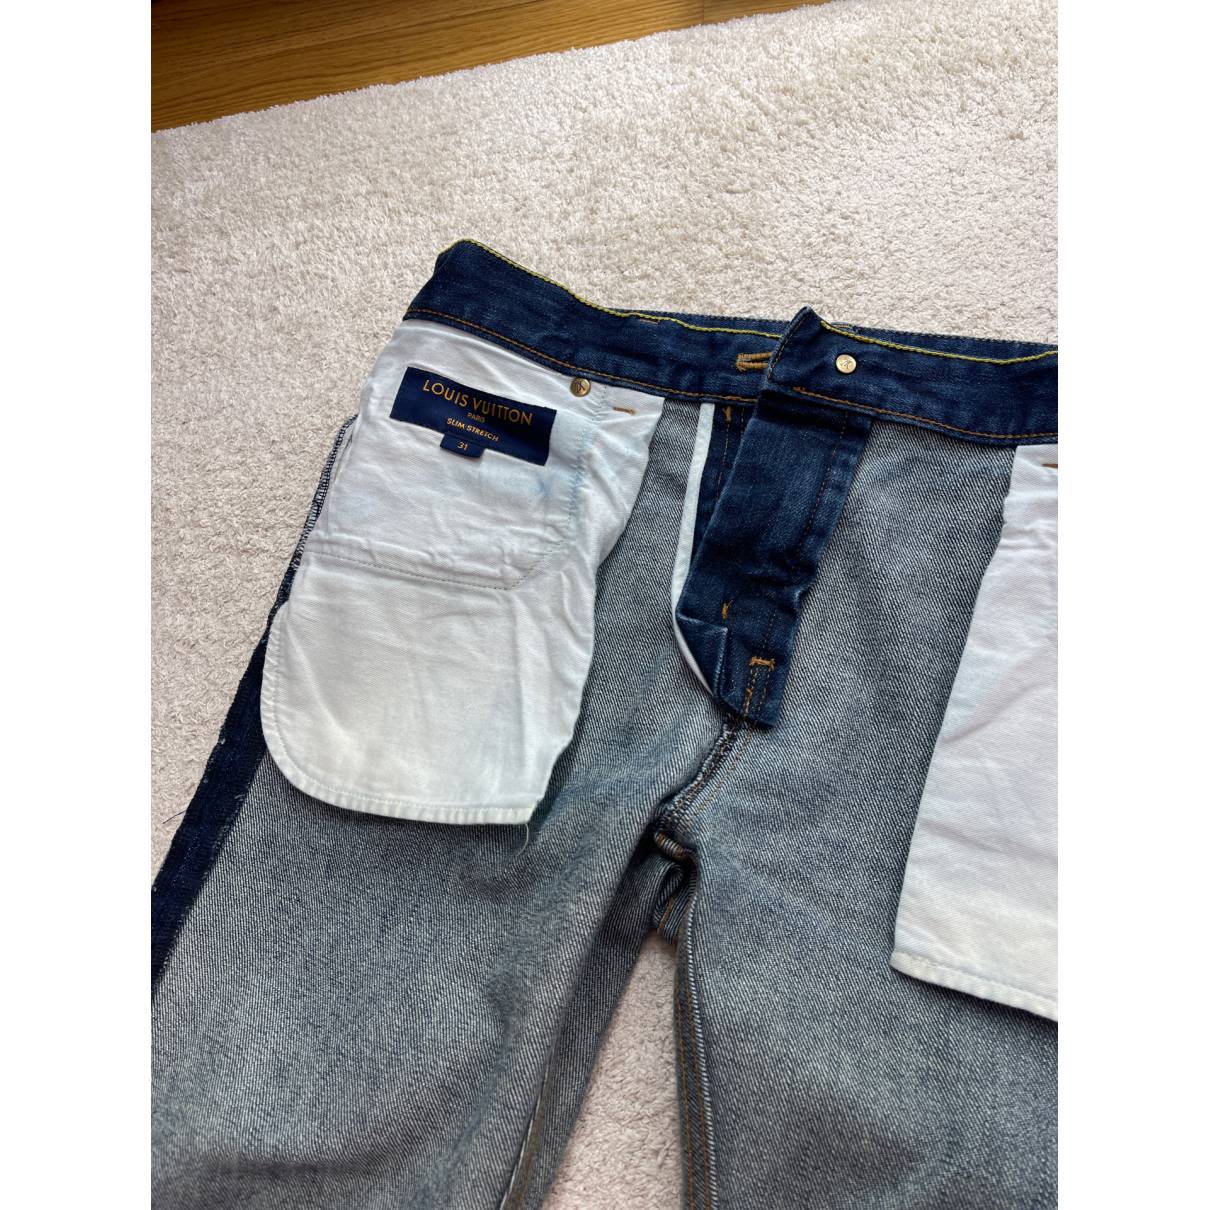 Louis Vuitton Washed Slim Jeans Washed Indigo. Size 32